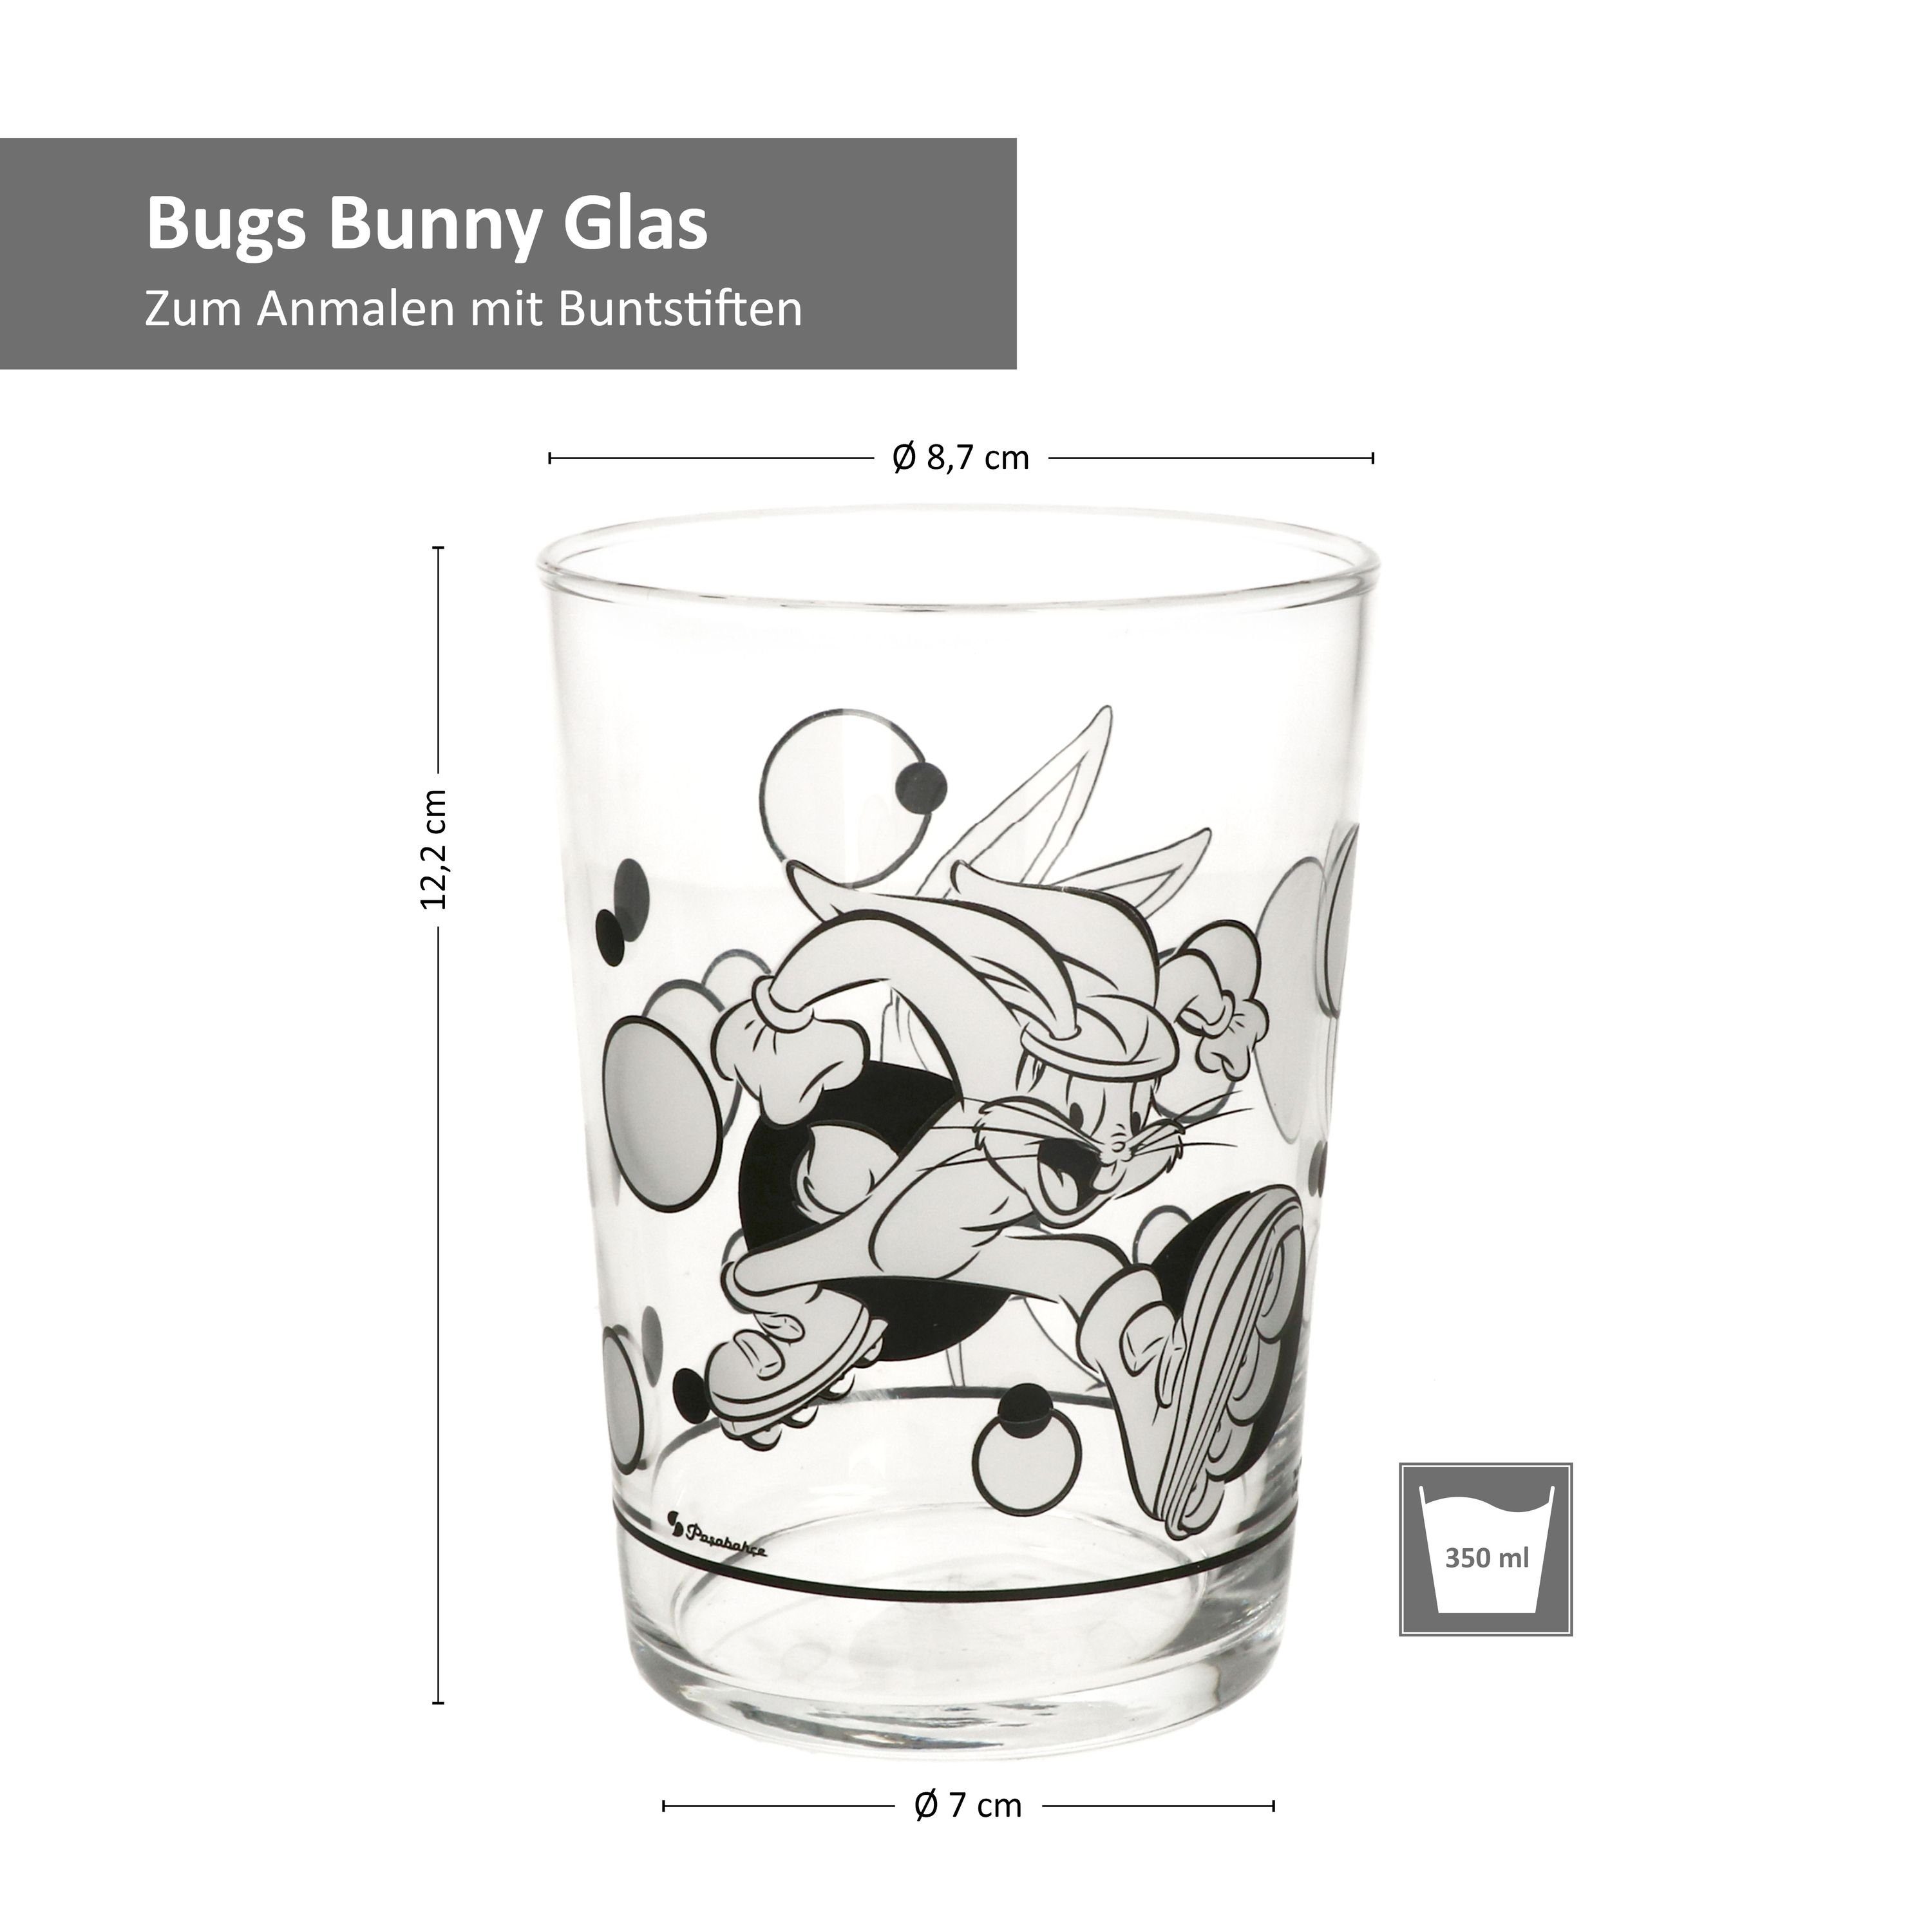 MamboCat Glas 4er Set Bugs Glas Bunny Glas zum Anmalen - 0168440, 350ml